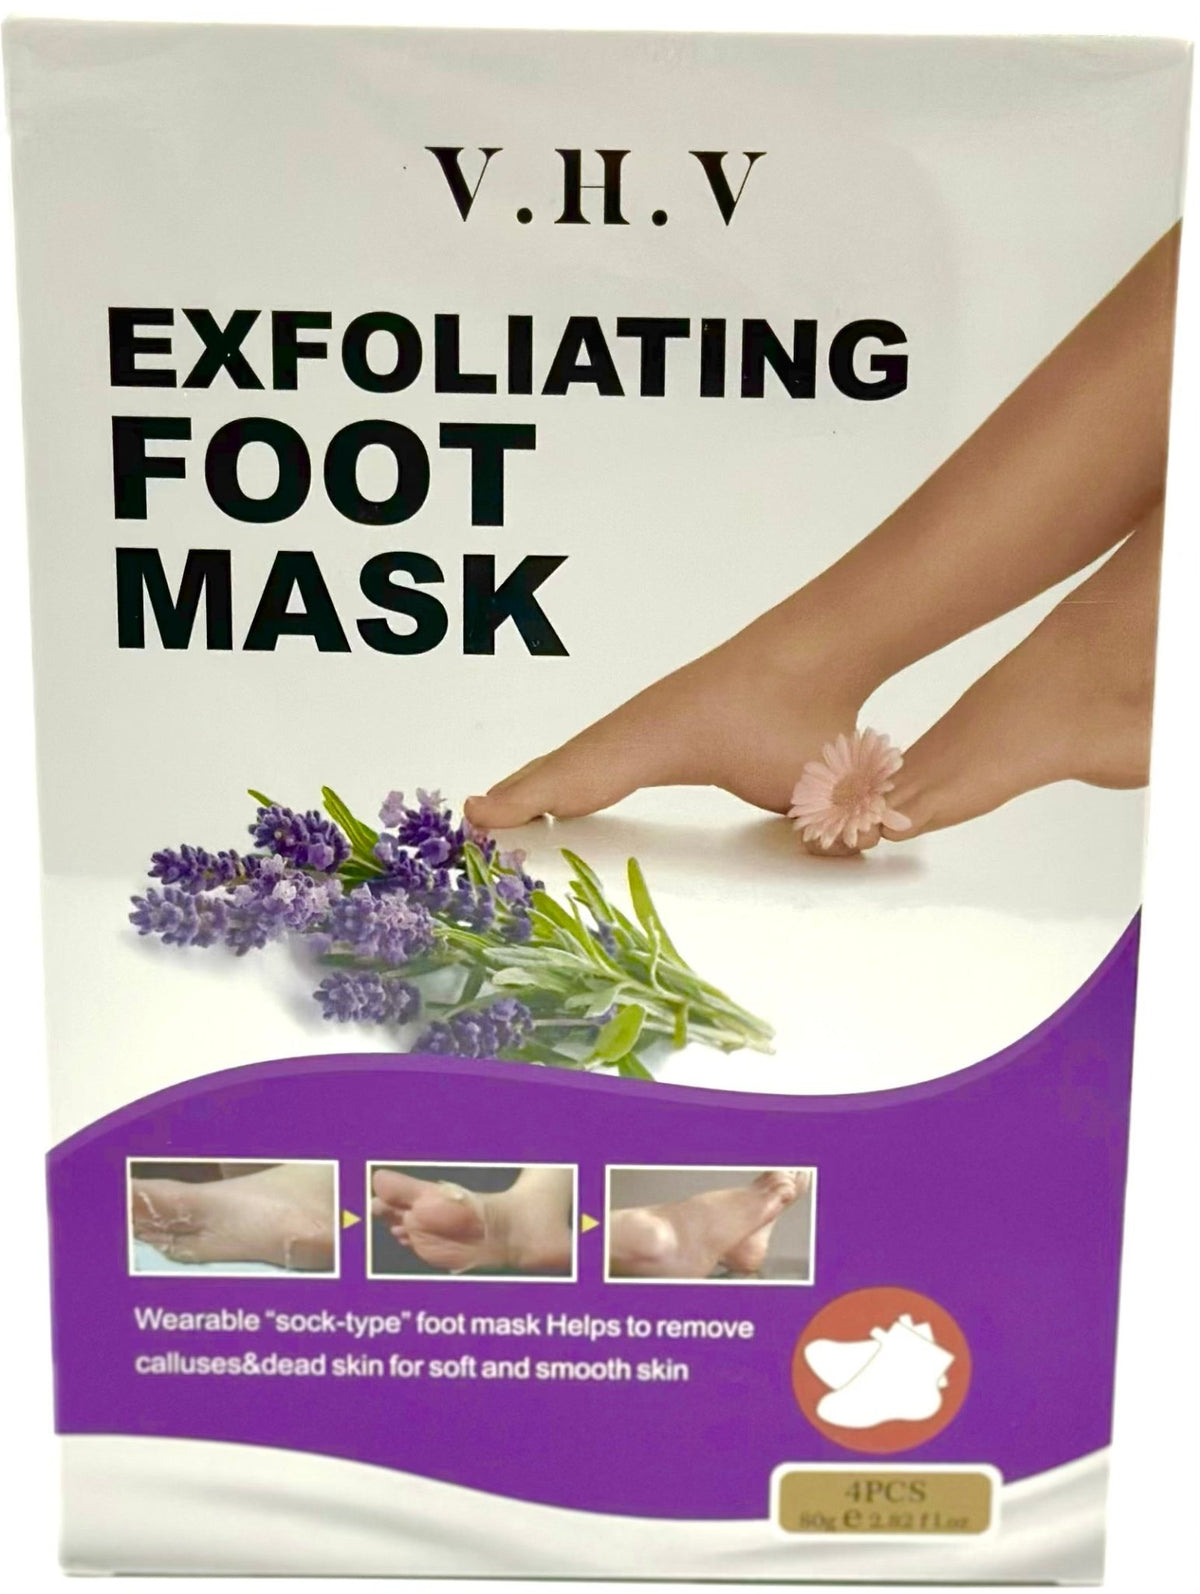 Exfoliating Foot Mask Απολεπιστική Μάσκα Ποδιών 4 ΤΜΧ by V.H.V - BEAUTYV.H.V®The GrBazaar of Brands